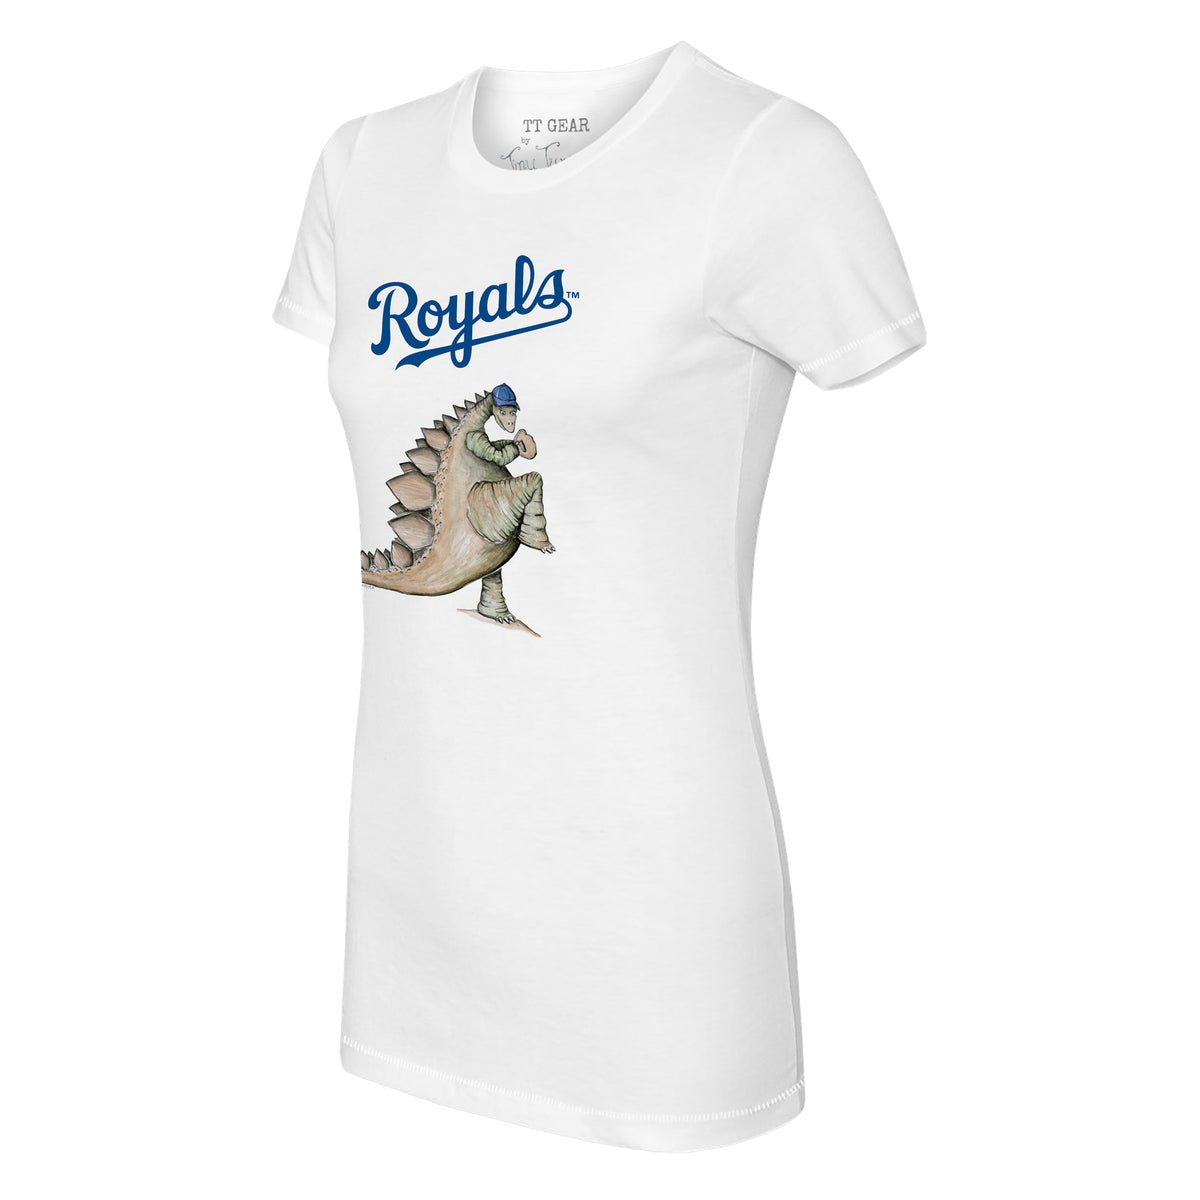 Tiny Turnip Kansas City Royals Babes Tee Shirt Women's XL / White